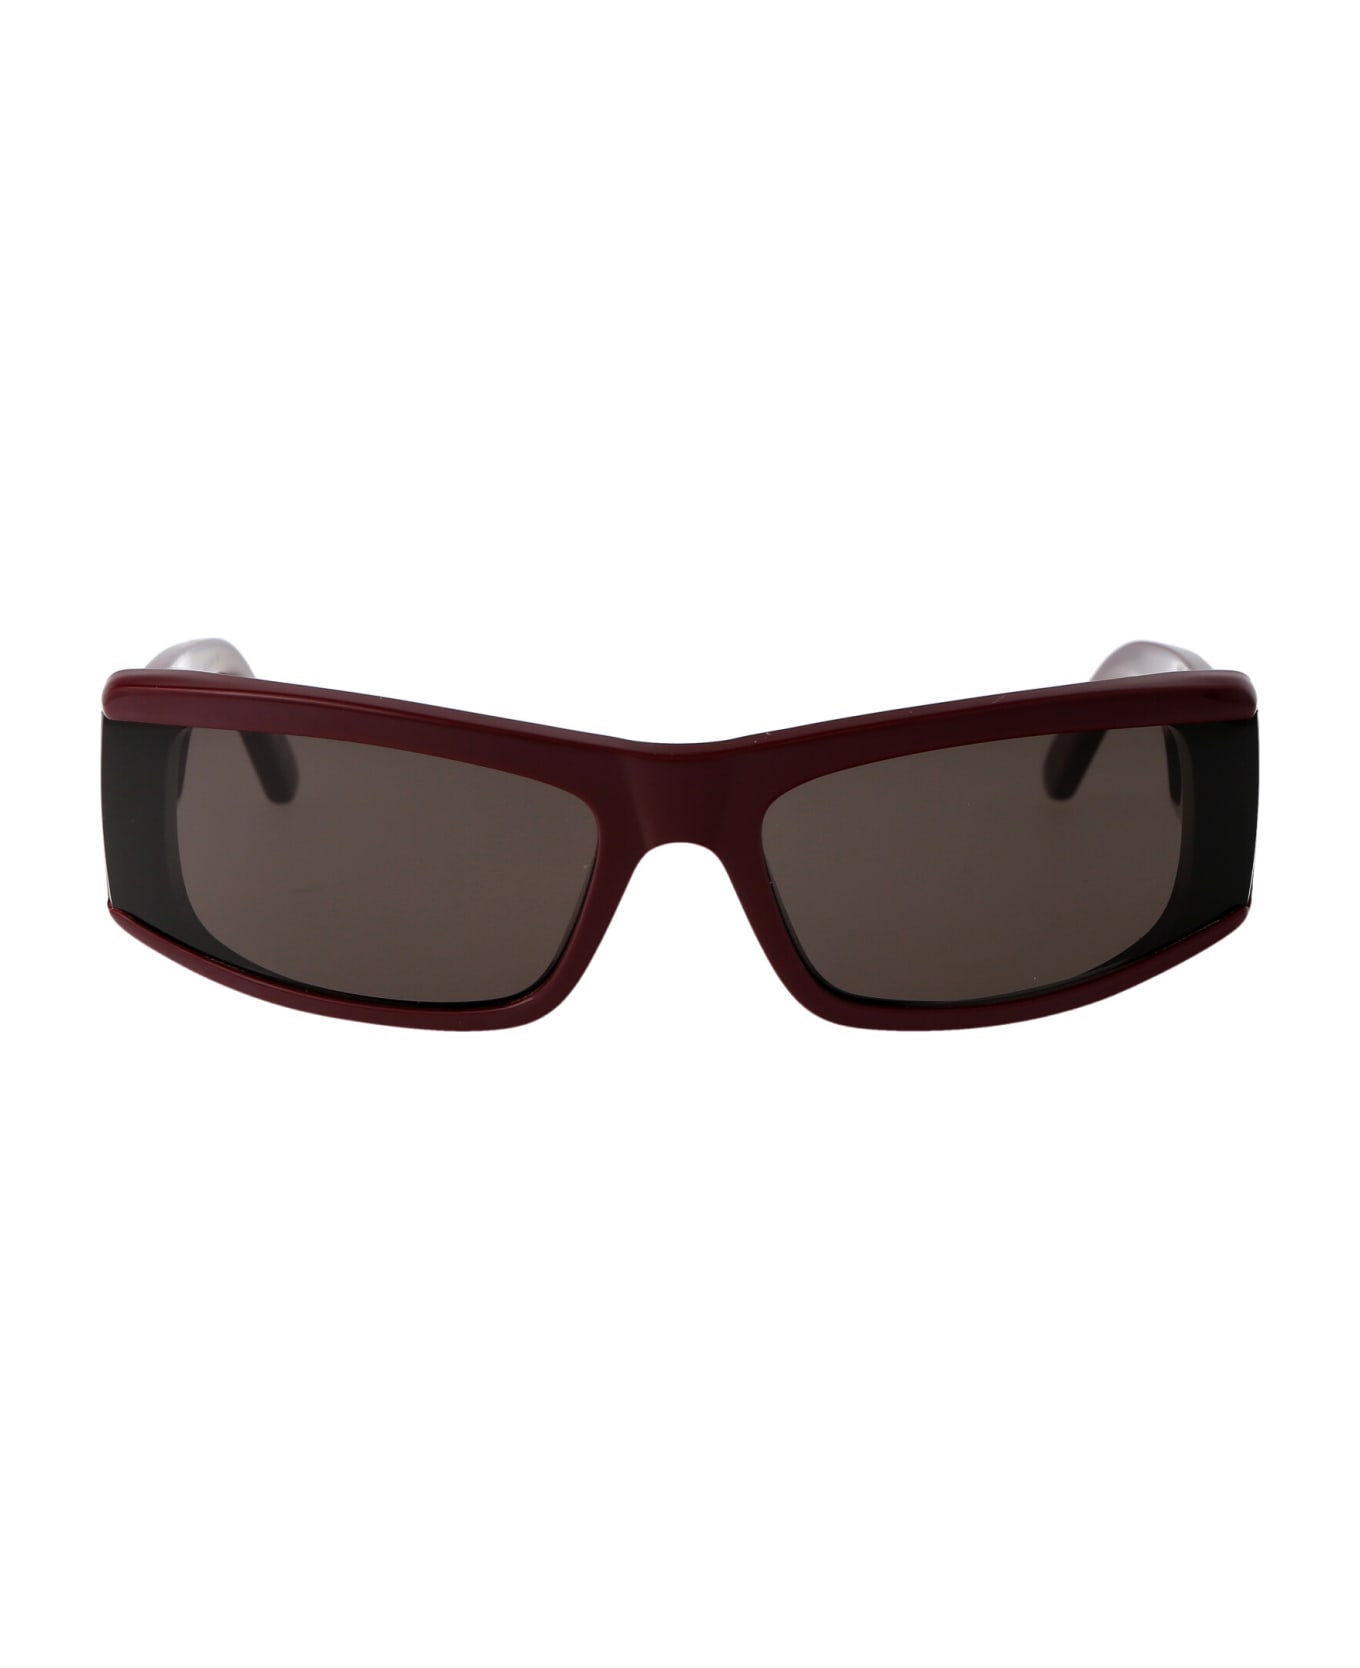 Balenciaga Eyewear Bb0301s Sunglasses - 004 BURGUNDY BURGUNDY GREY